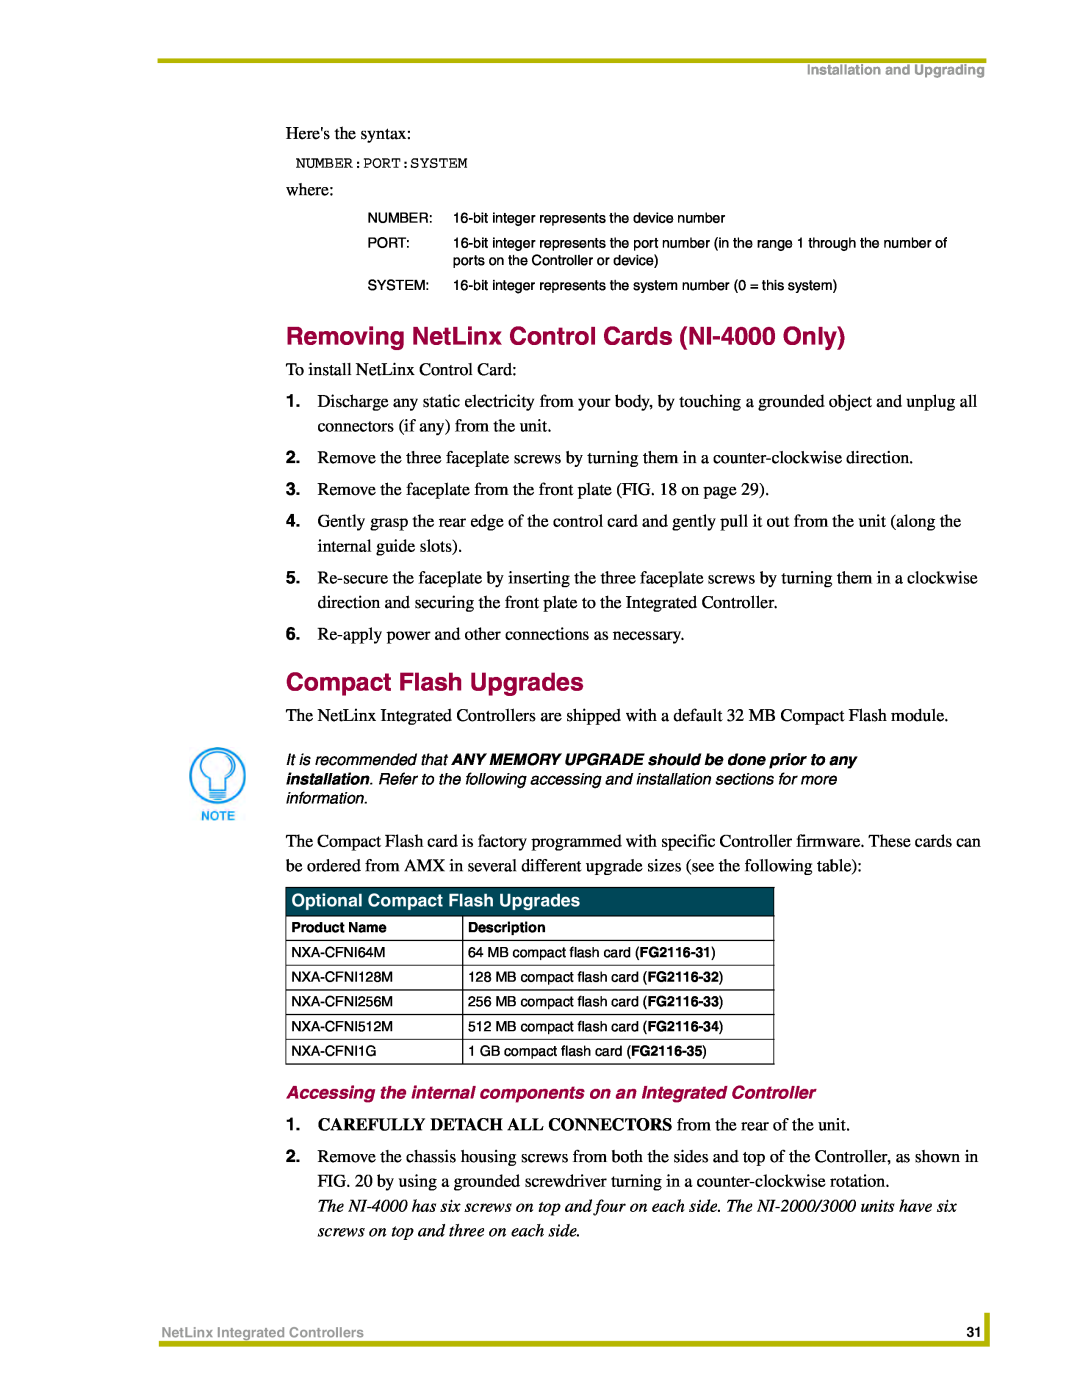 AMX NI-3000, NI-2000 instruction manual Removing NetLinx Control Cards NI-4000 Only, Optional Compact Flash Upgrades 